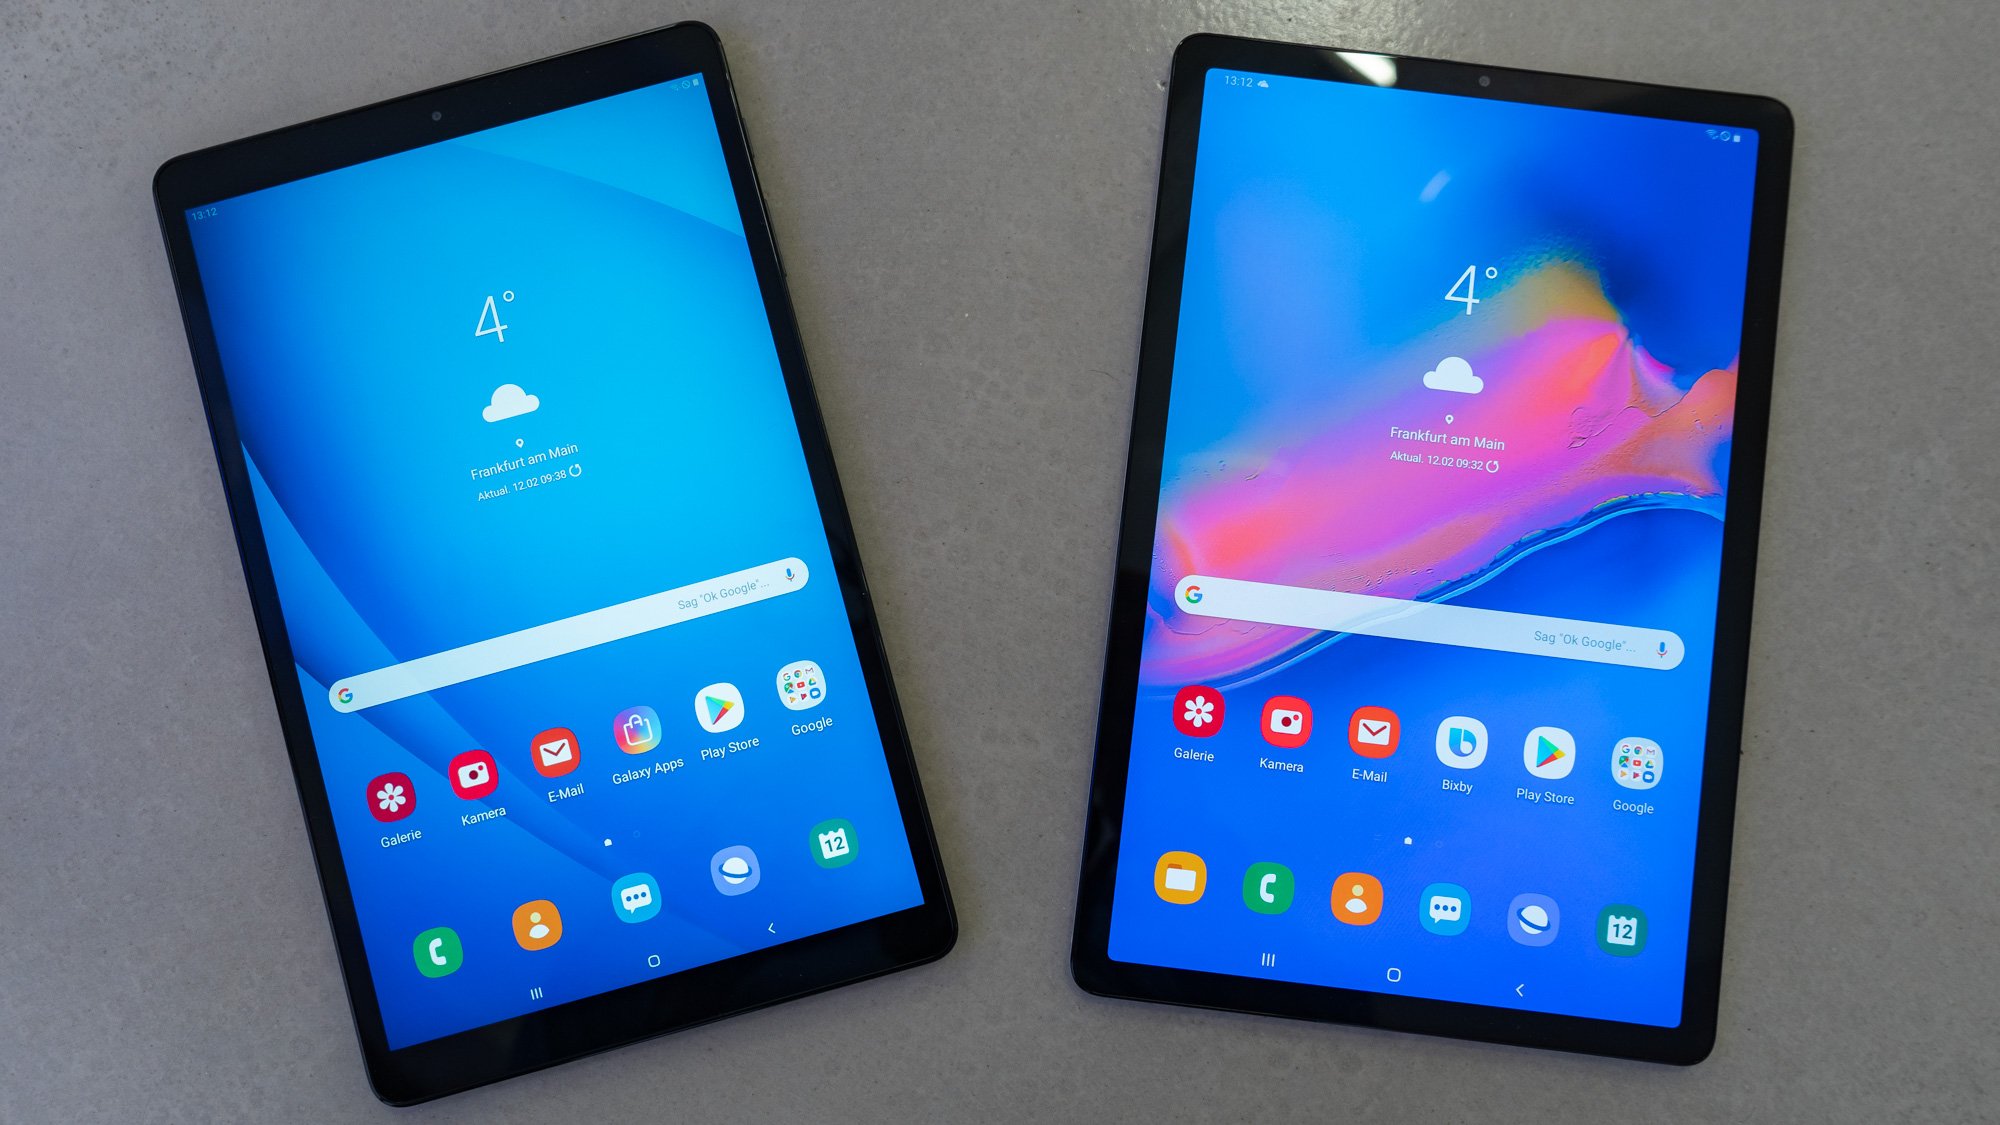 Samsung stellt neue Tablets vor: das Galaxy Tab S5e und Galaxy Tab A 2019  AllroundPC.com